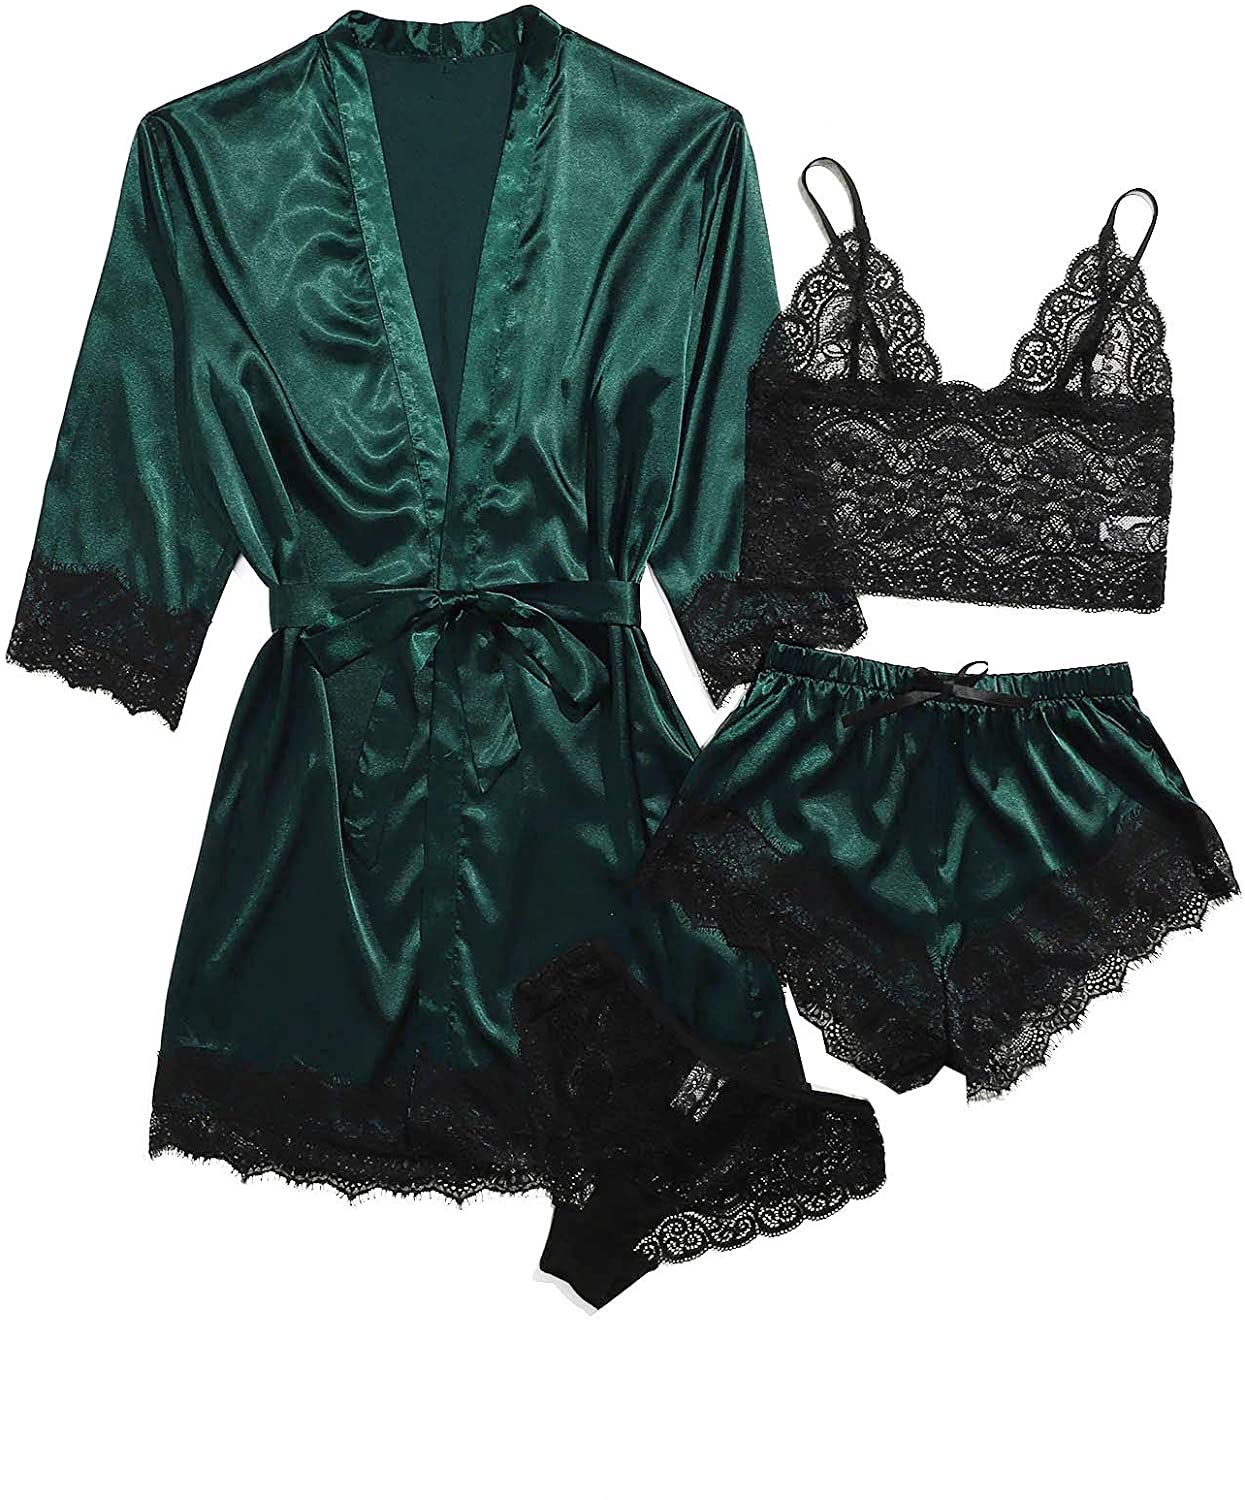 SOLY HUX Women's Sleepwear 4pcs Floral Lace Trim Satin Cami Pajama Set ...